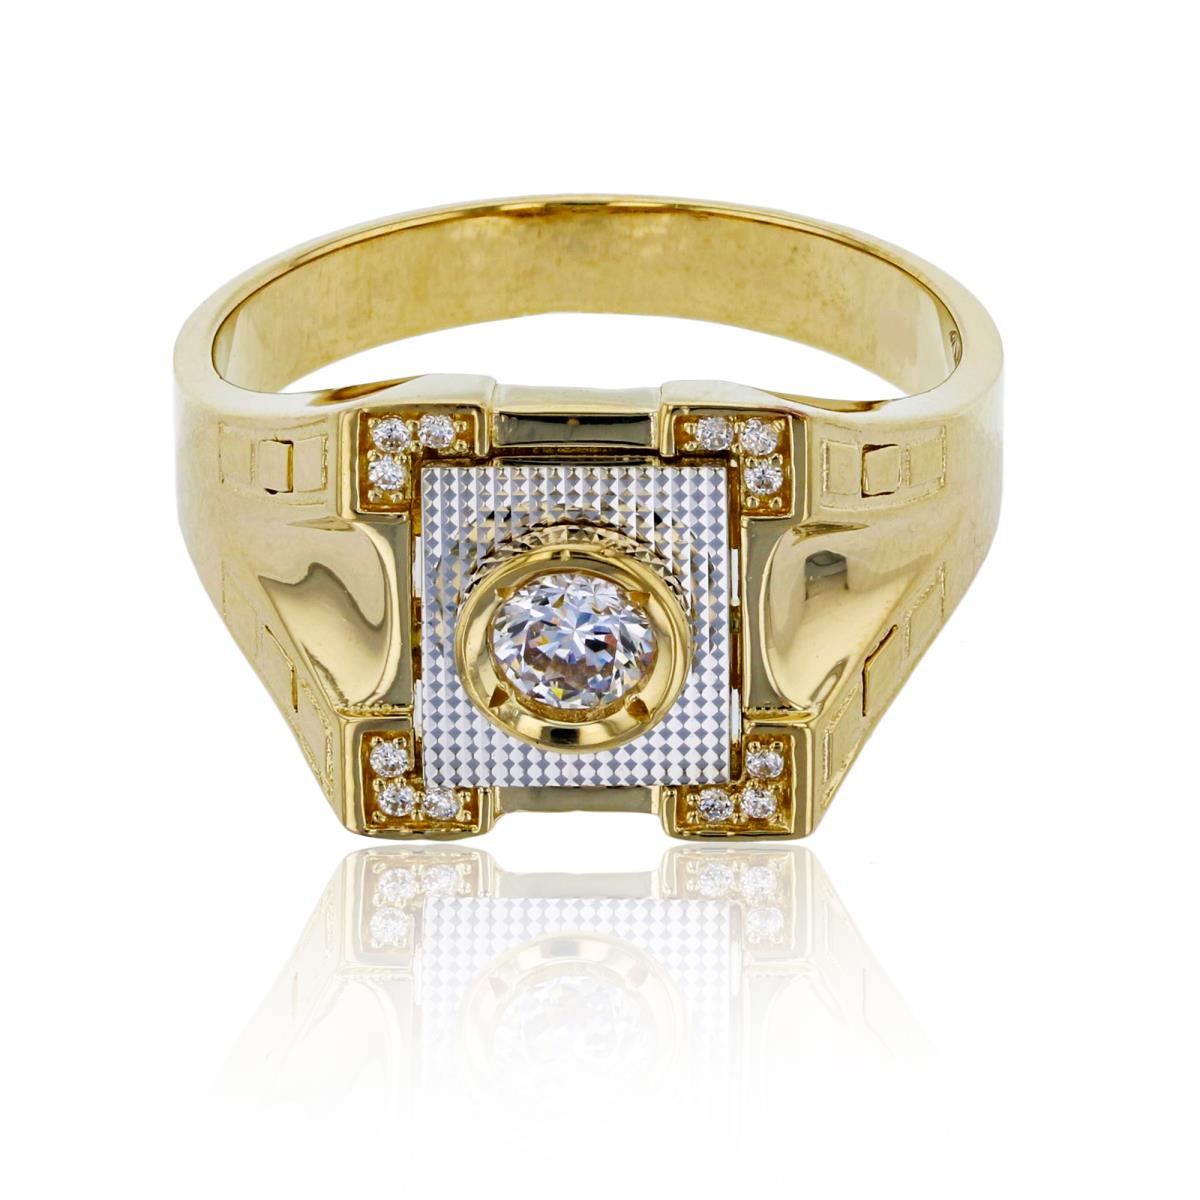 14K Gold Yellow & White 14mm Square Bezel Ring